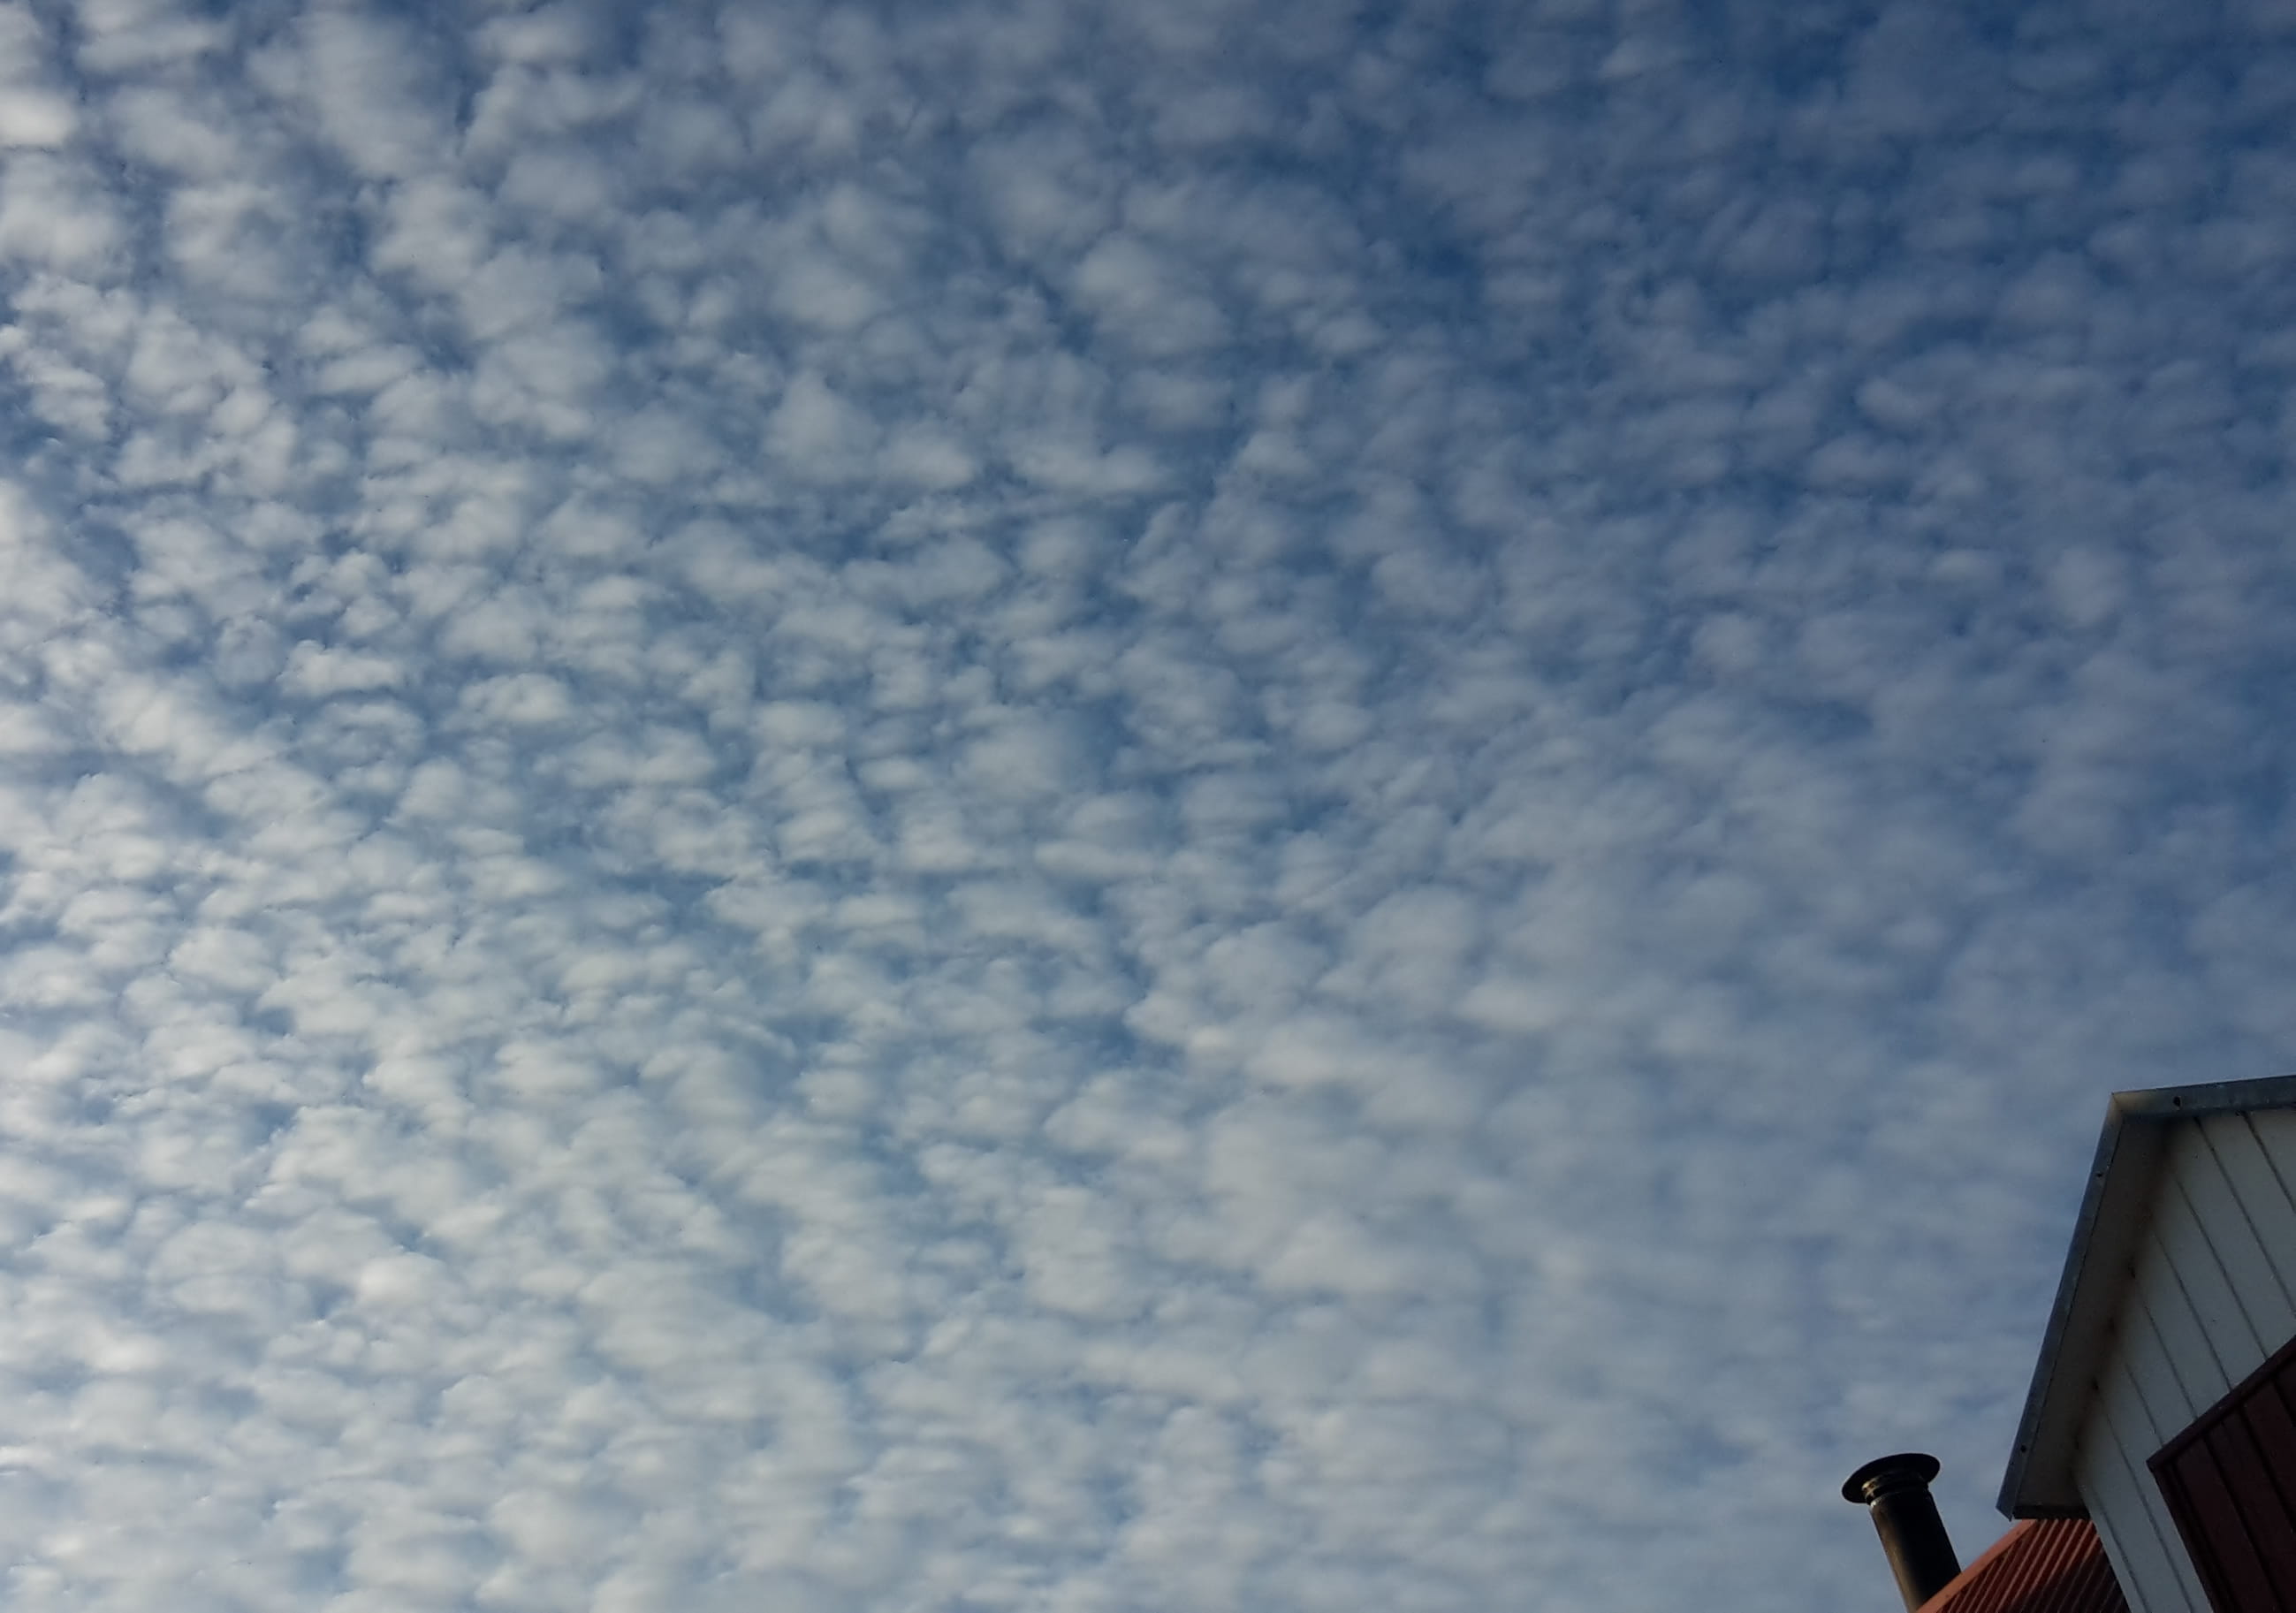 danmark, sky, denmark, clouds, cloud - sky, low angle view